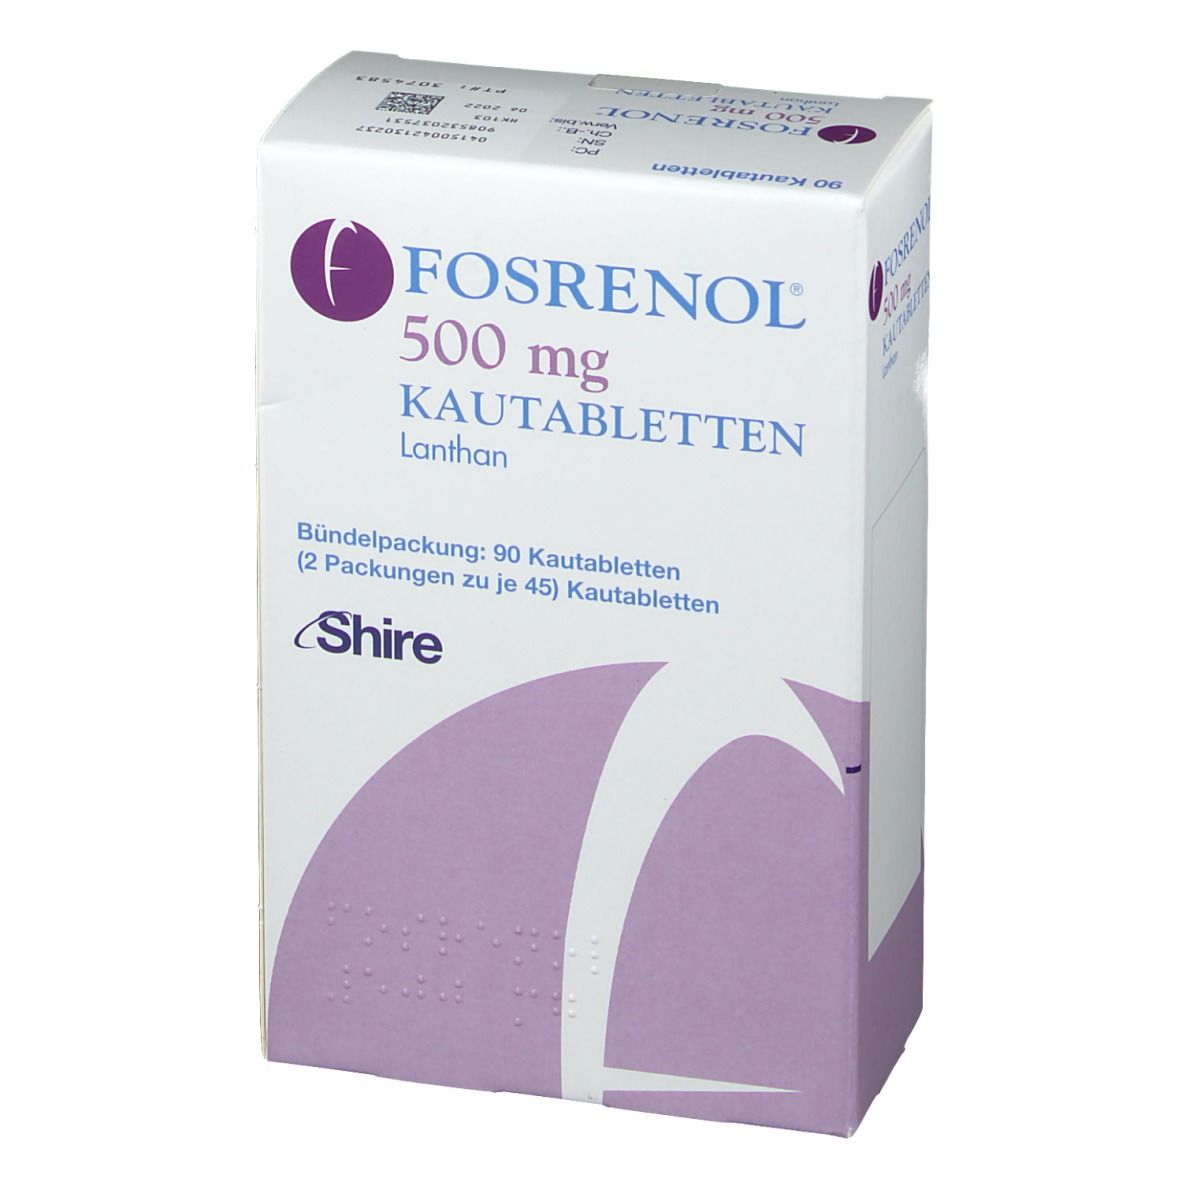 Fosrenol® 500 mg